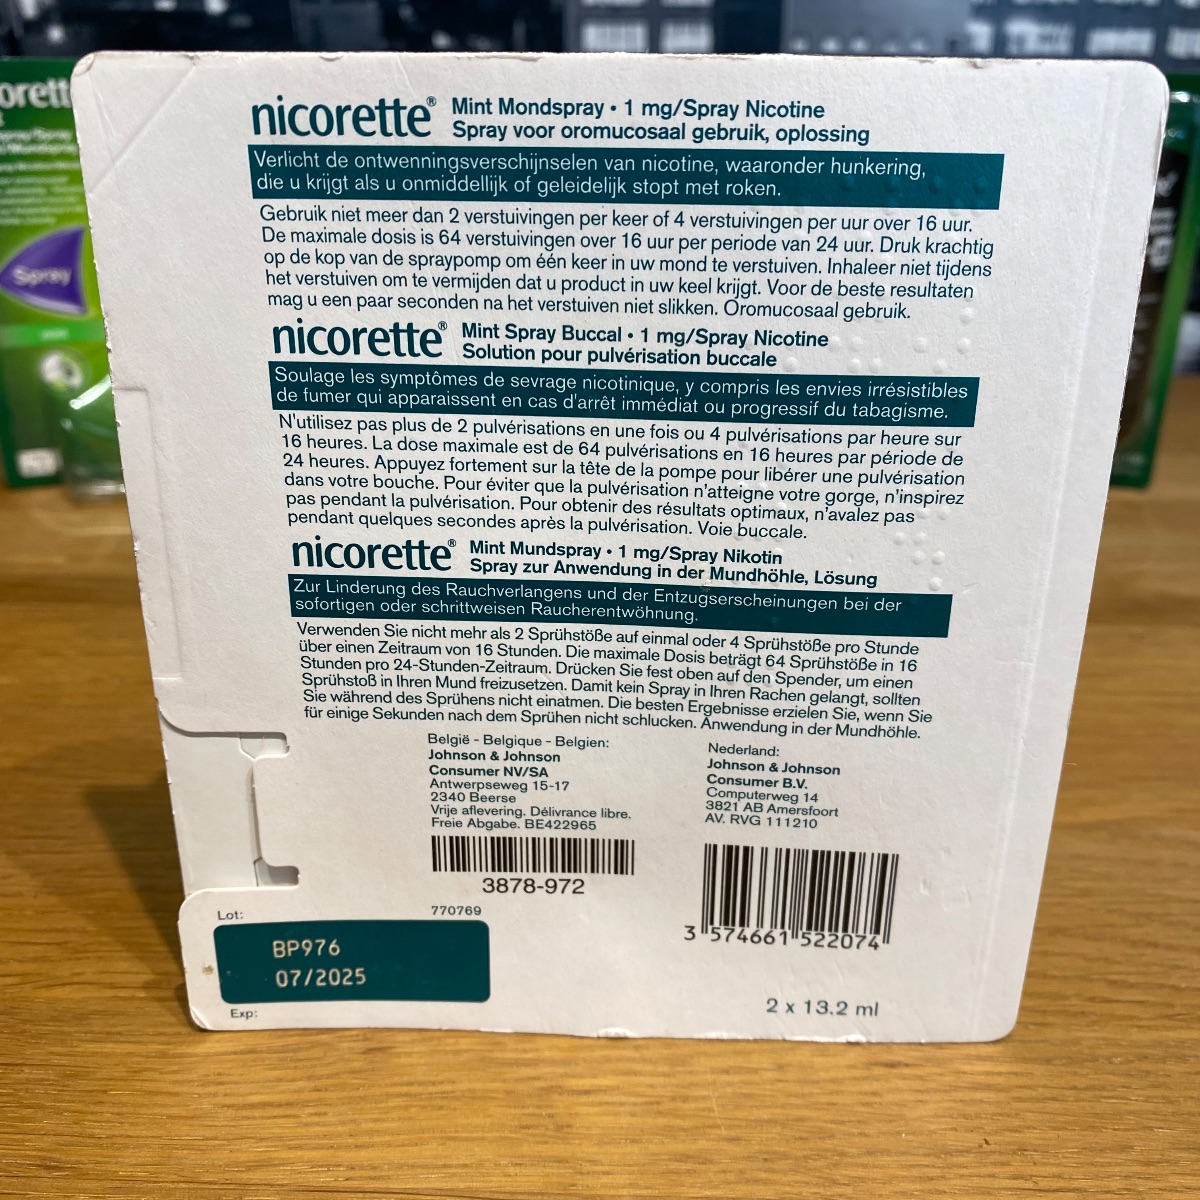 Nicorette Mint Mouth Spray Freshmint Nicotine Sprays 2 x 150gr Pack Sealed MOUTH SPRAY 3574661522074 (Brand New)